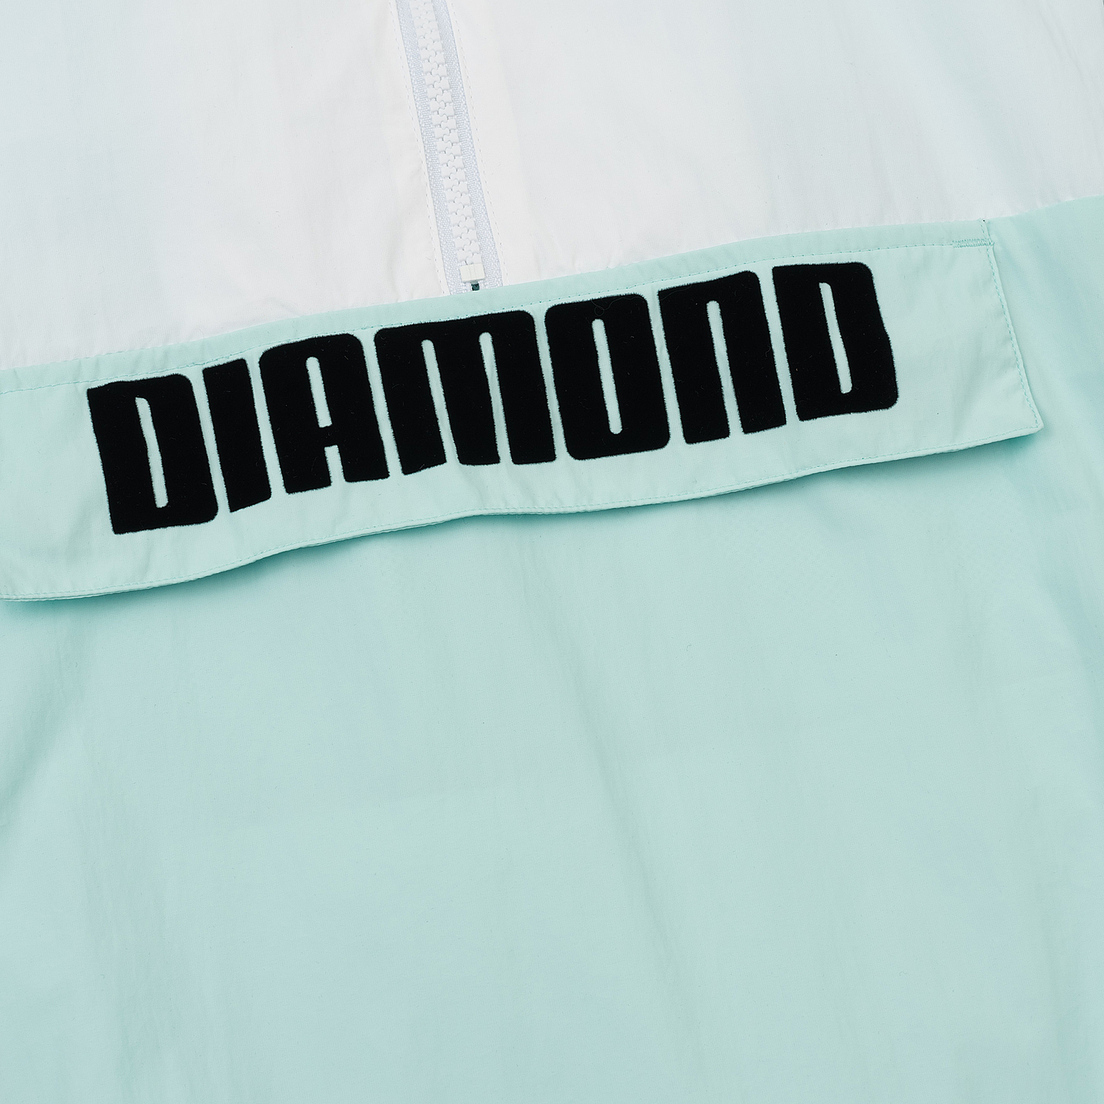 Puma Мужская куртка анорак x Diamond Supply Co Savannah